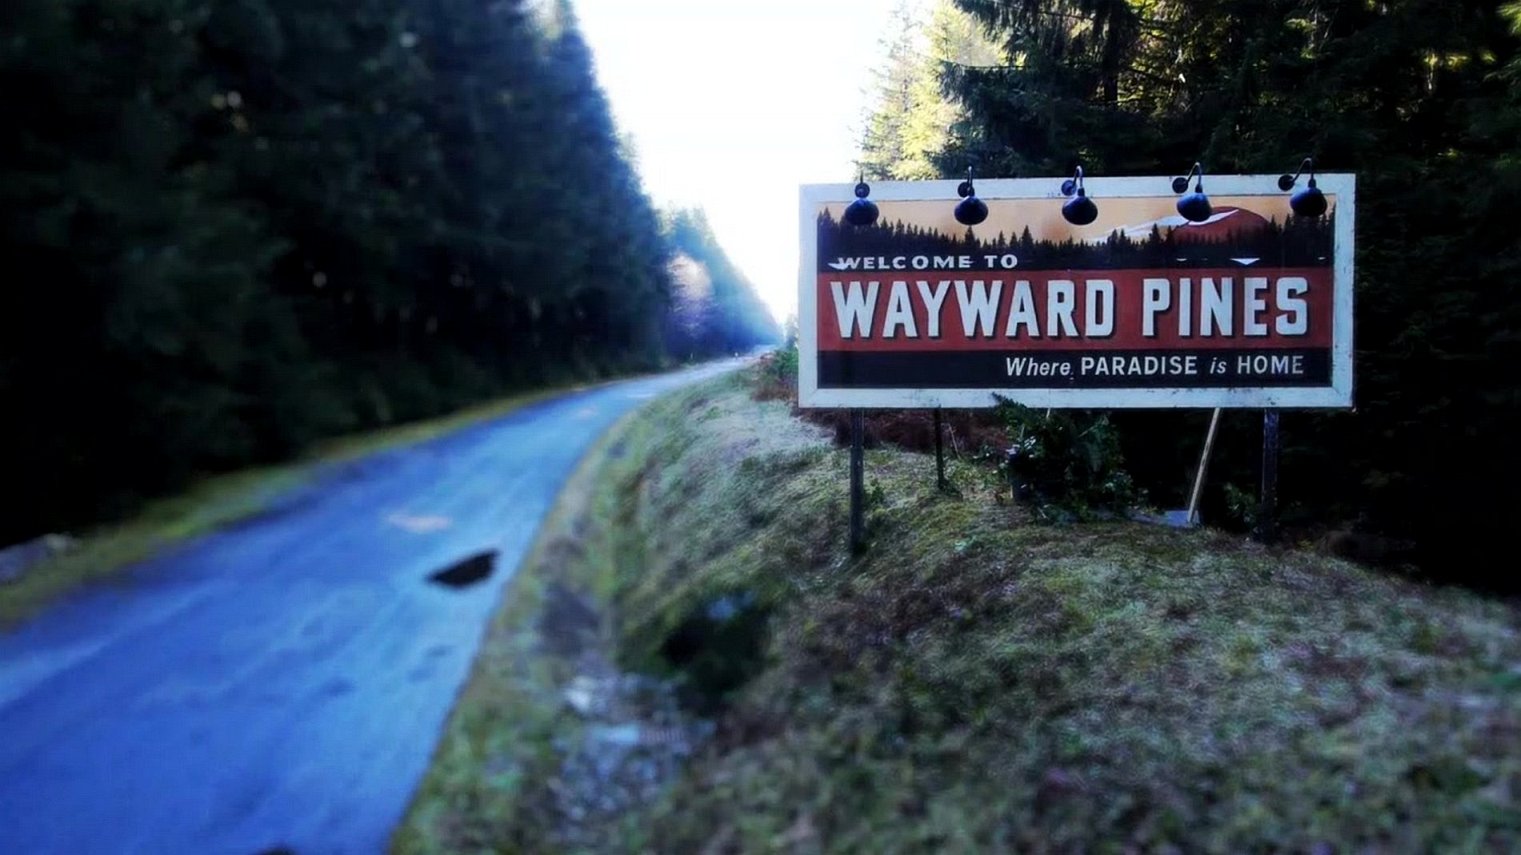 cast of Wayward Pines season 2